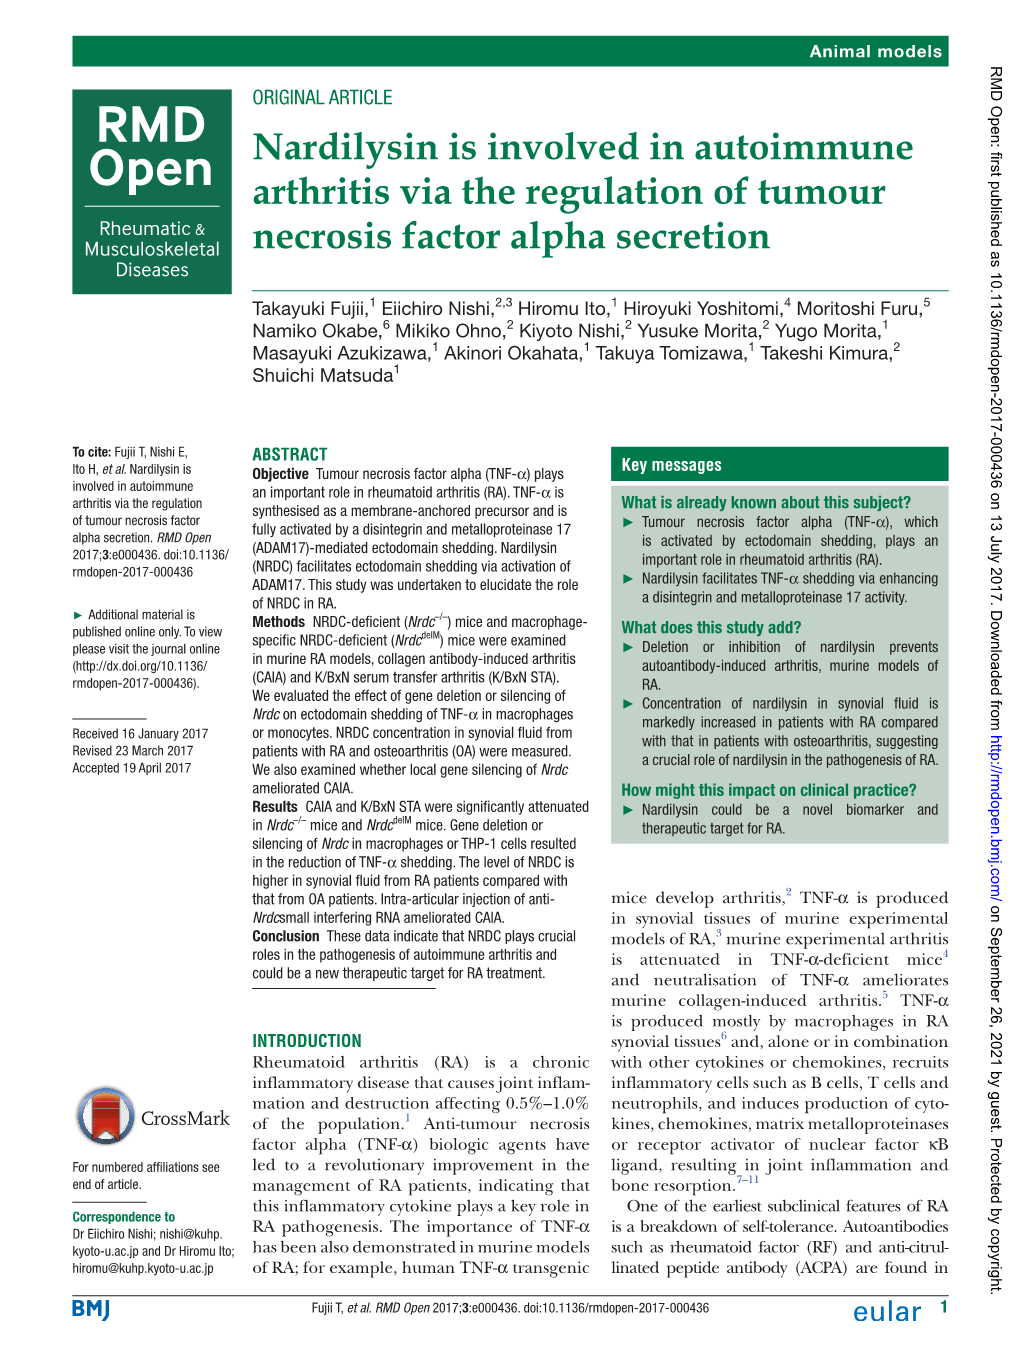 Nardilysin Is Involved in Autoimmune Arthritis Via the Regulation of Tumour Necrosis Factor Alpha Secretion